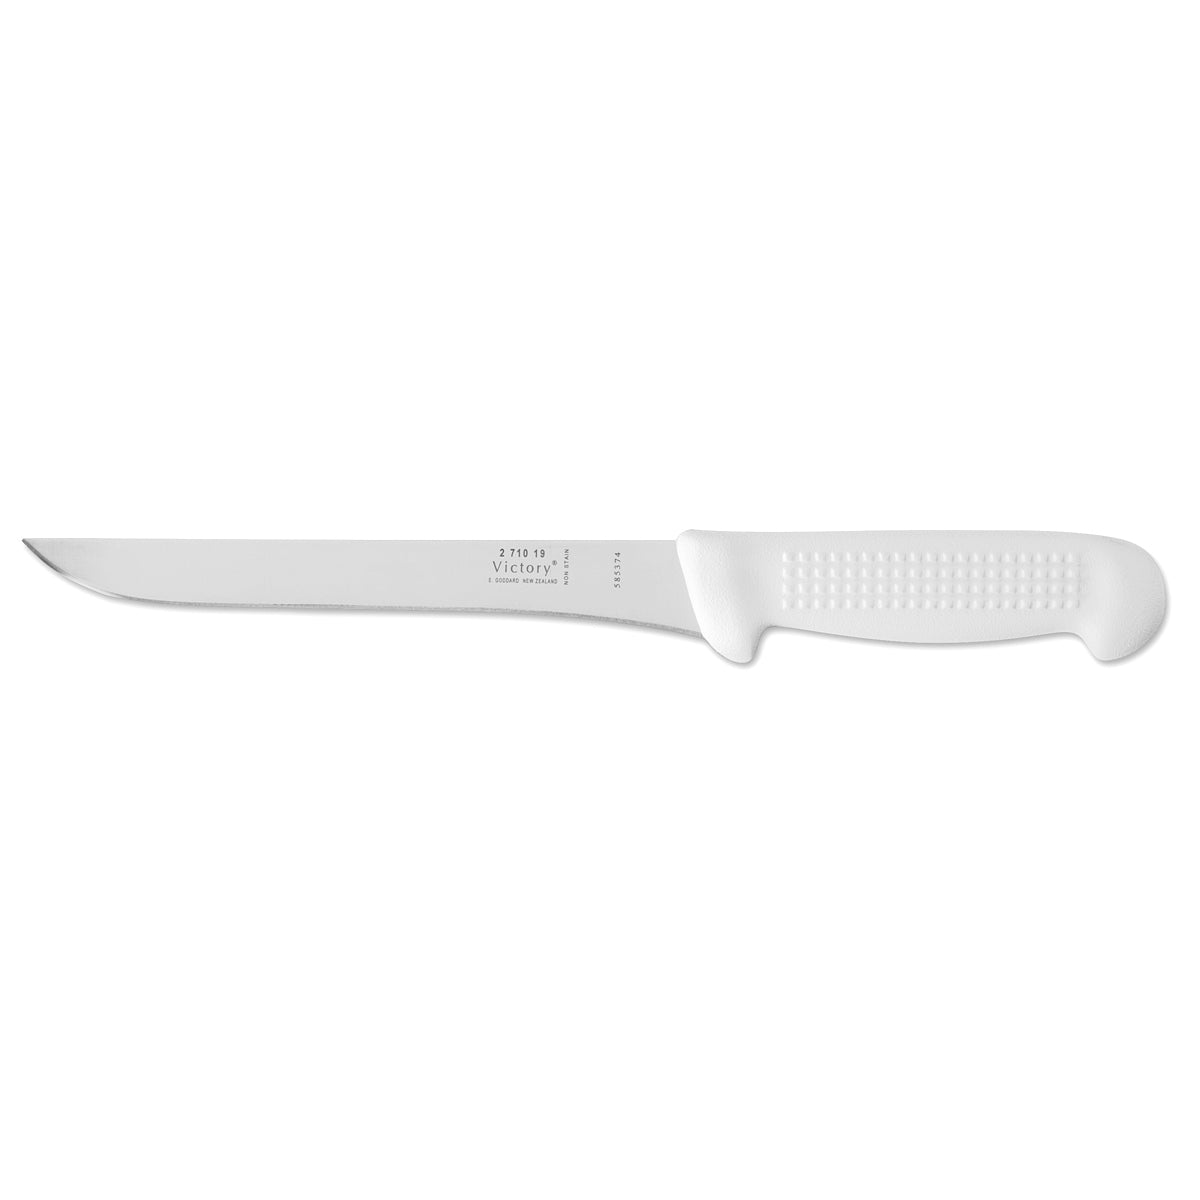 Straight boning knife 19cm